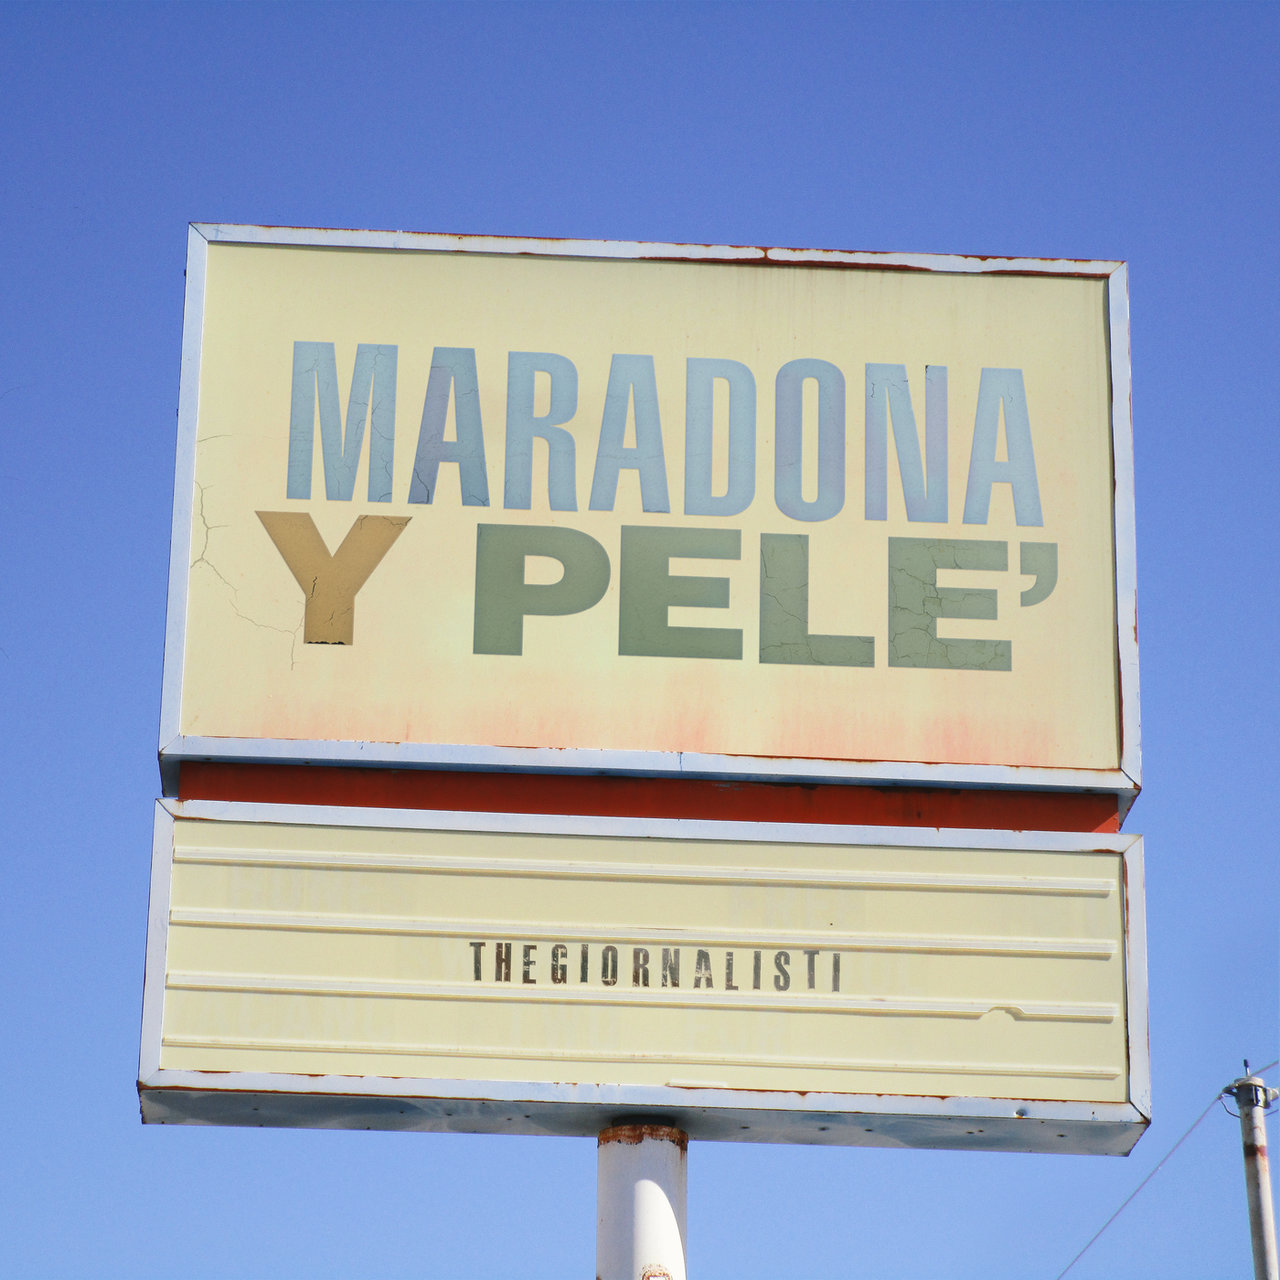 Thegiornalisti Maradona y Pelé cover artwork